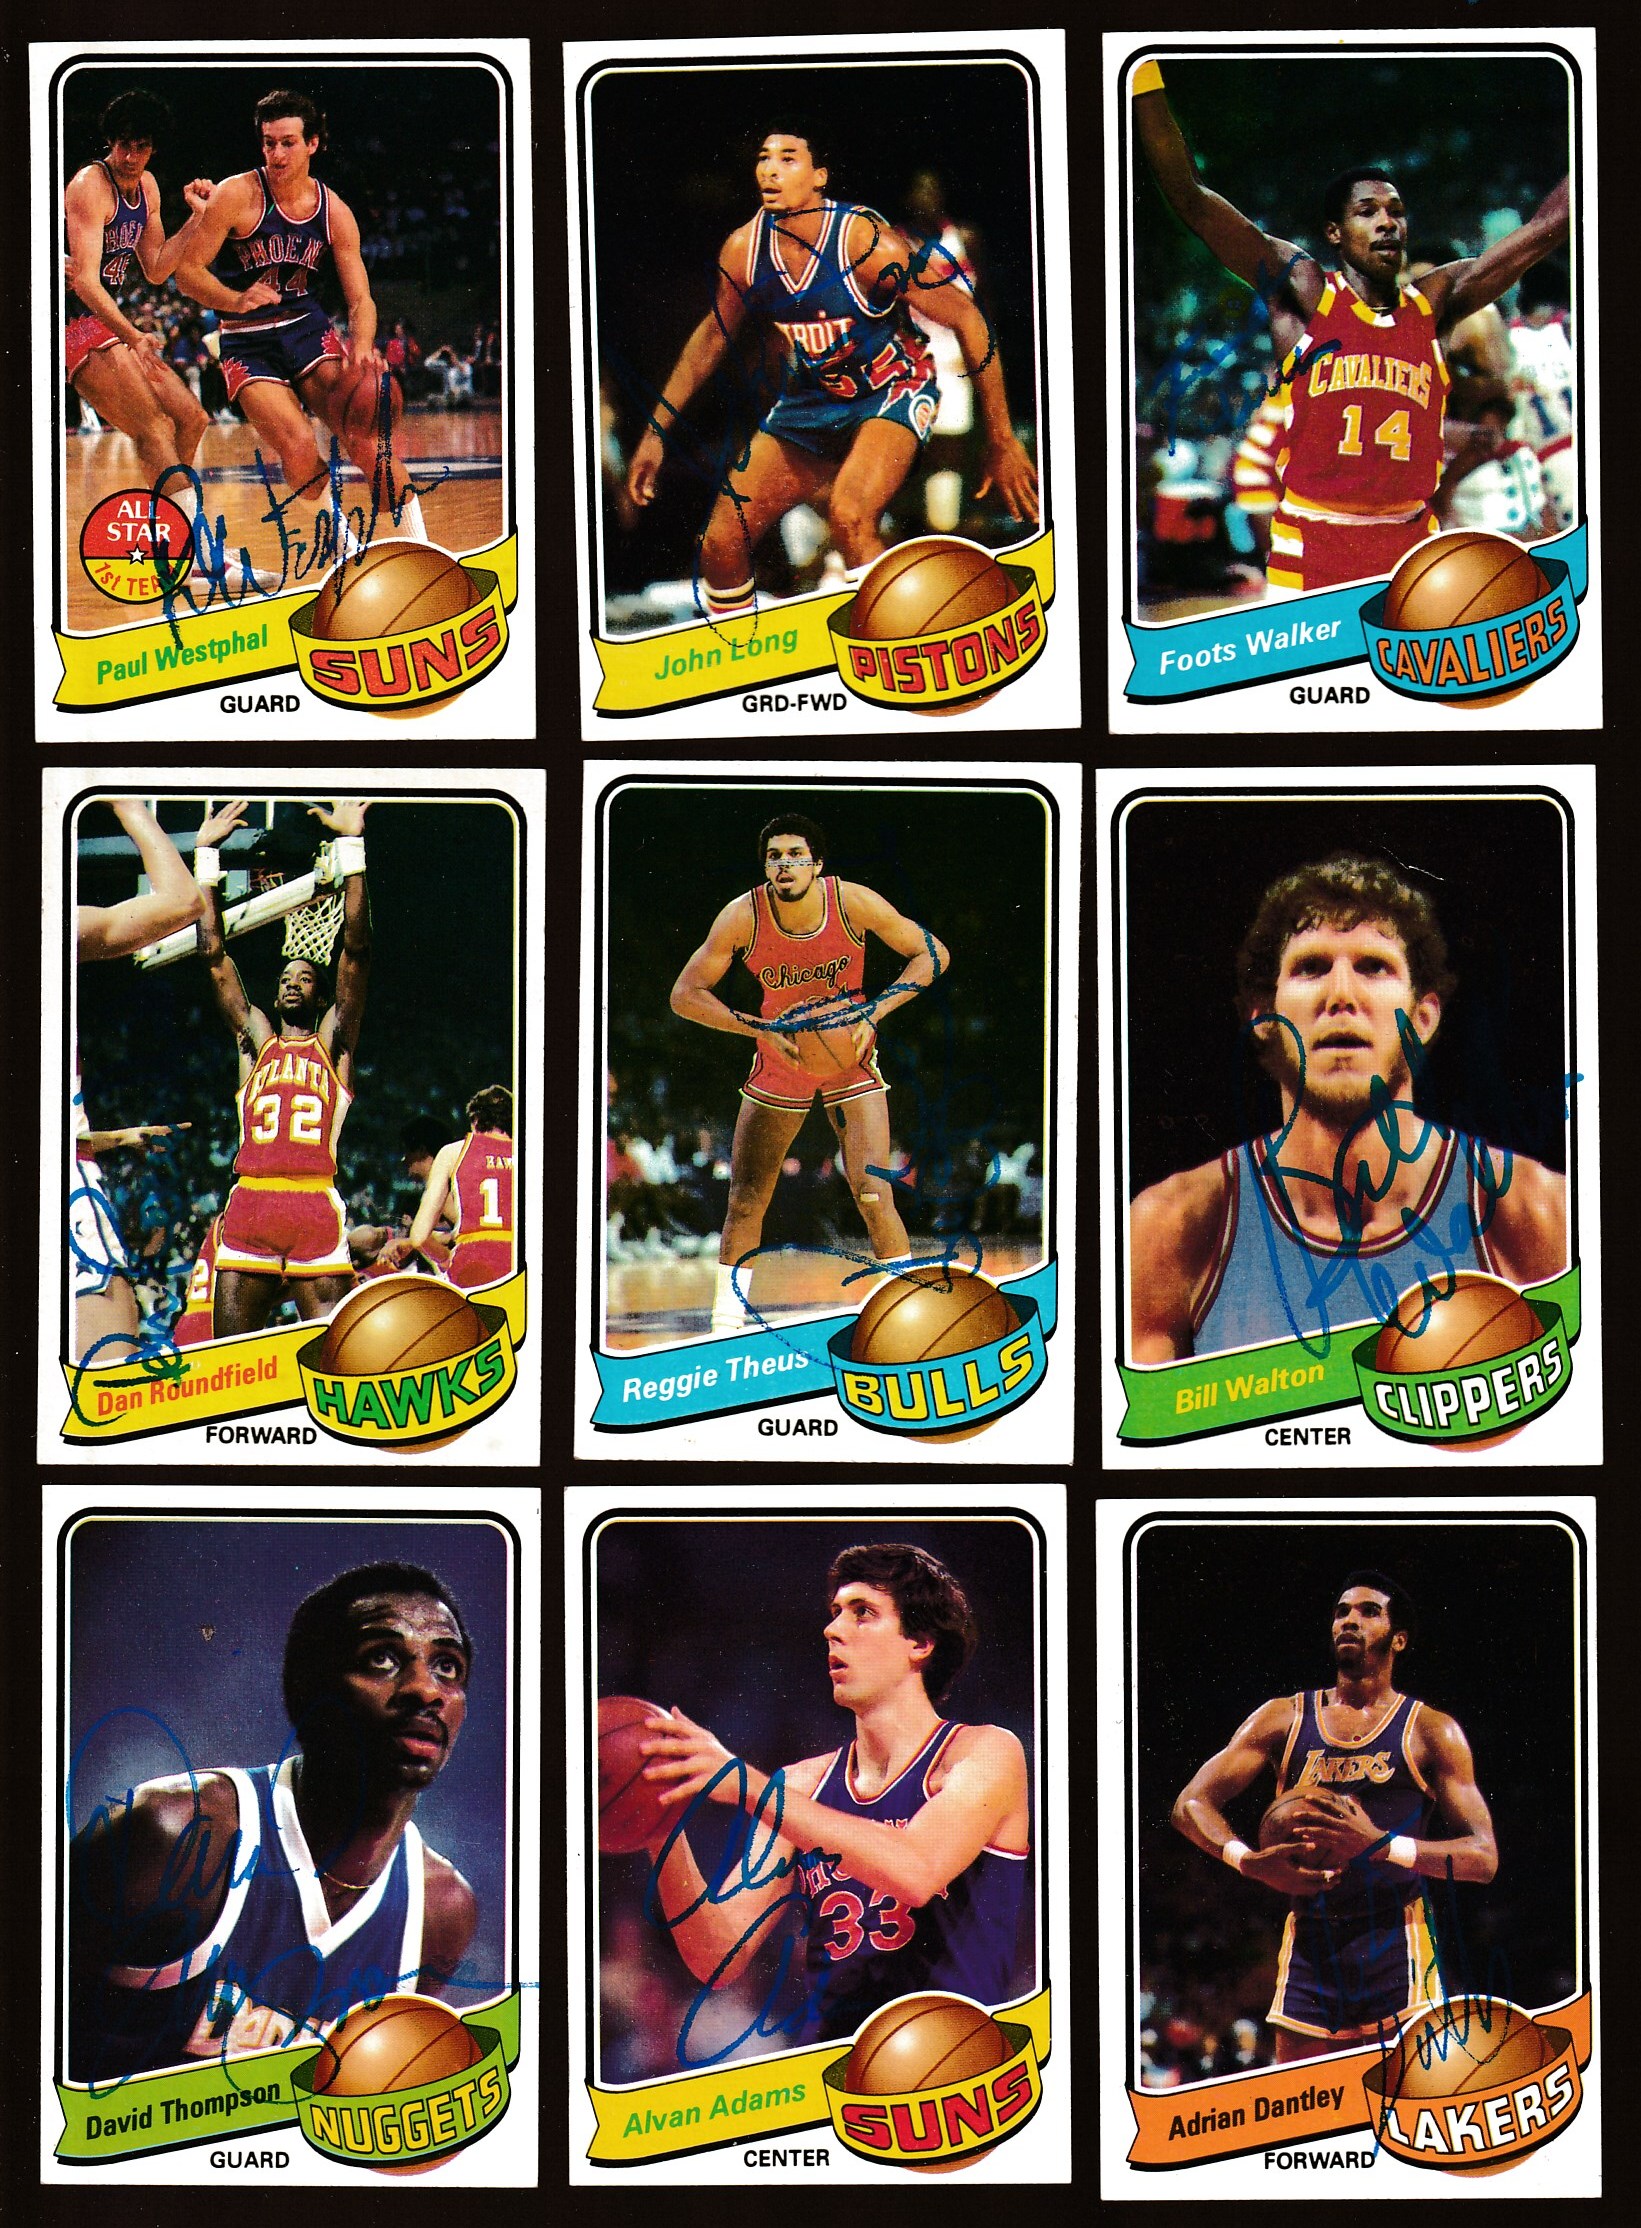 1979-80 Topps Basketball # 52 Alvan Adams AUTOGRAPHED (Suns) Basketball cards value